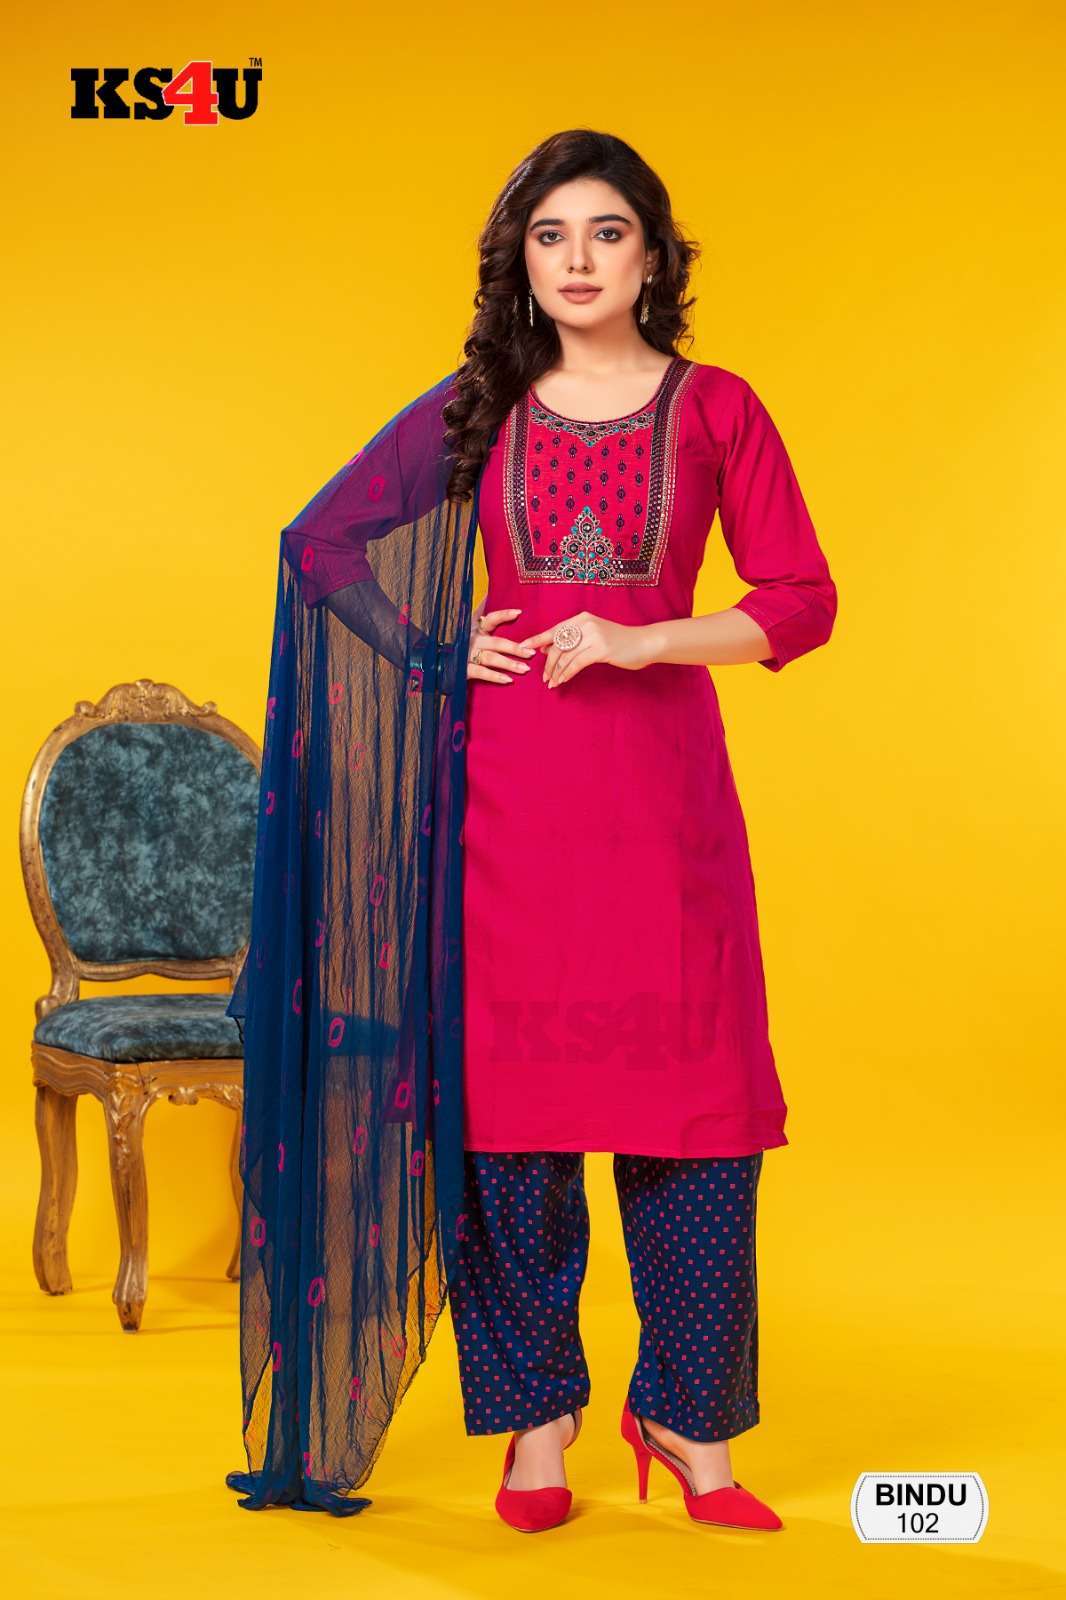 Top Block Printed Dress Material Manufacturers in Jaipur - ब्लॉक प्रिंटेड  ड्रेस मटेरियल मनुफक्चरर्स, जयपुर - Justdial